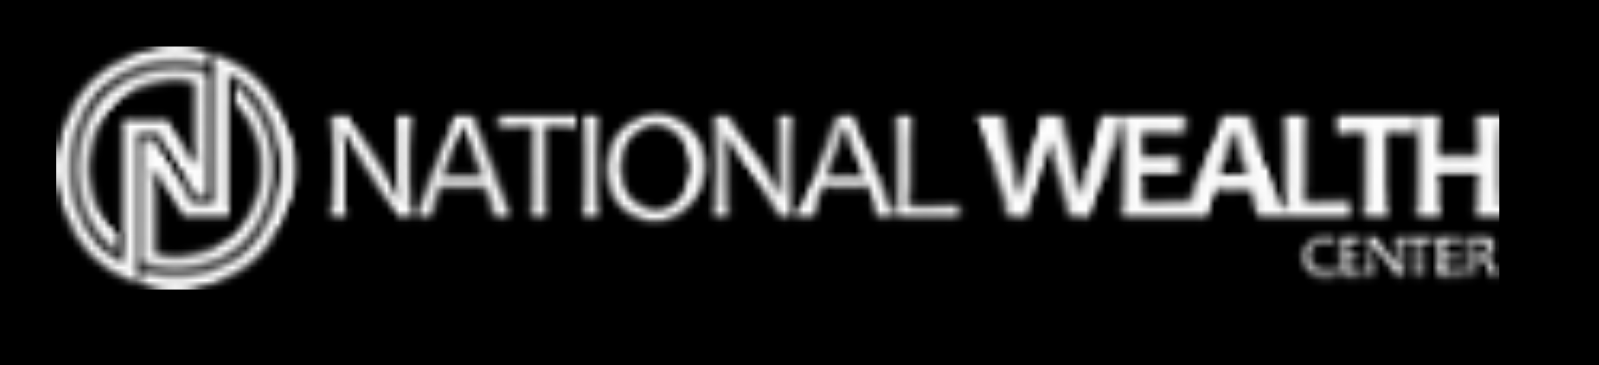 National Wealth Center logo